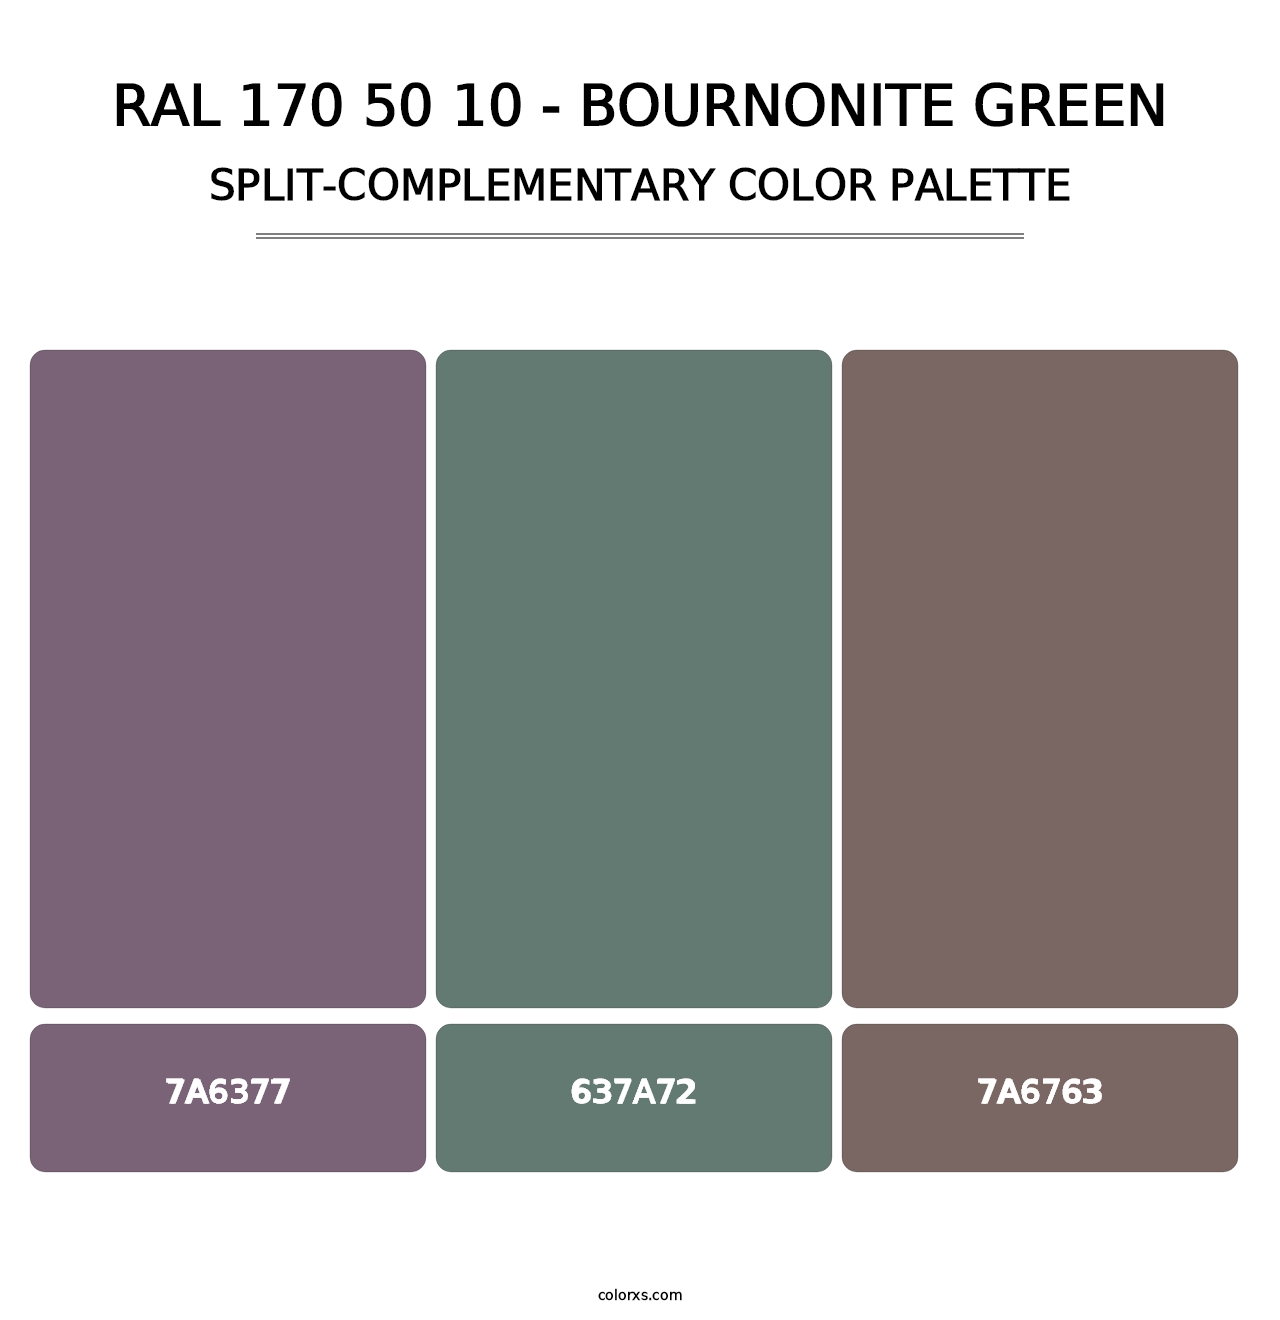 RAL 170 50 10 - Bournonite Green - Split-Complementary Color Palette